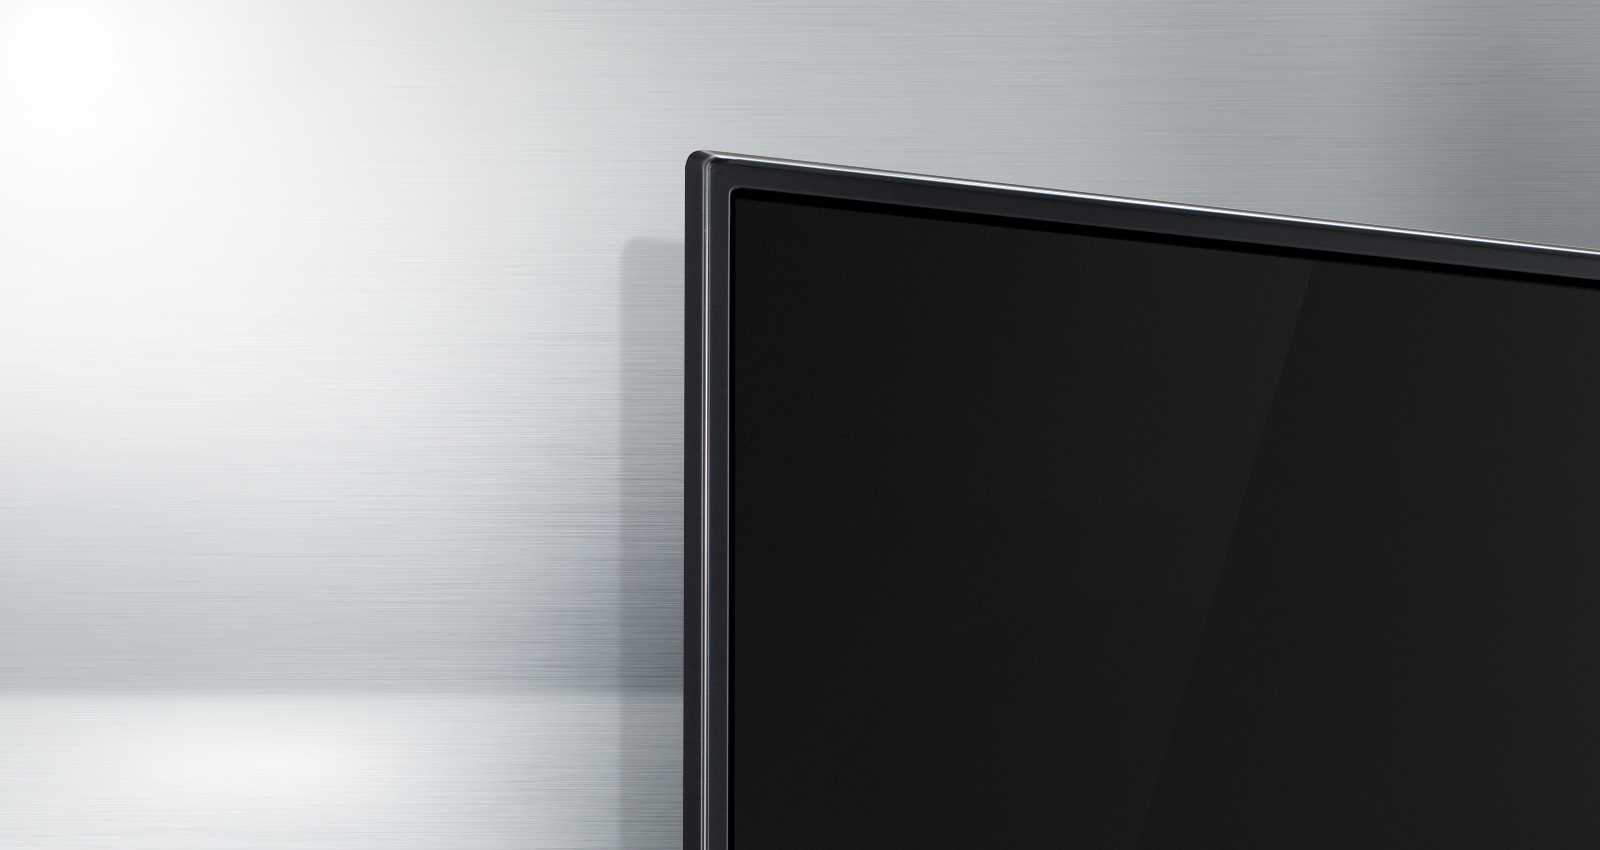 تلویزیون هوشمند ال جی LED TV Smart LG 55H60000GI - سایز 55 اینچ